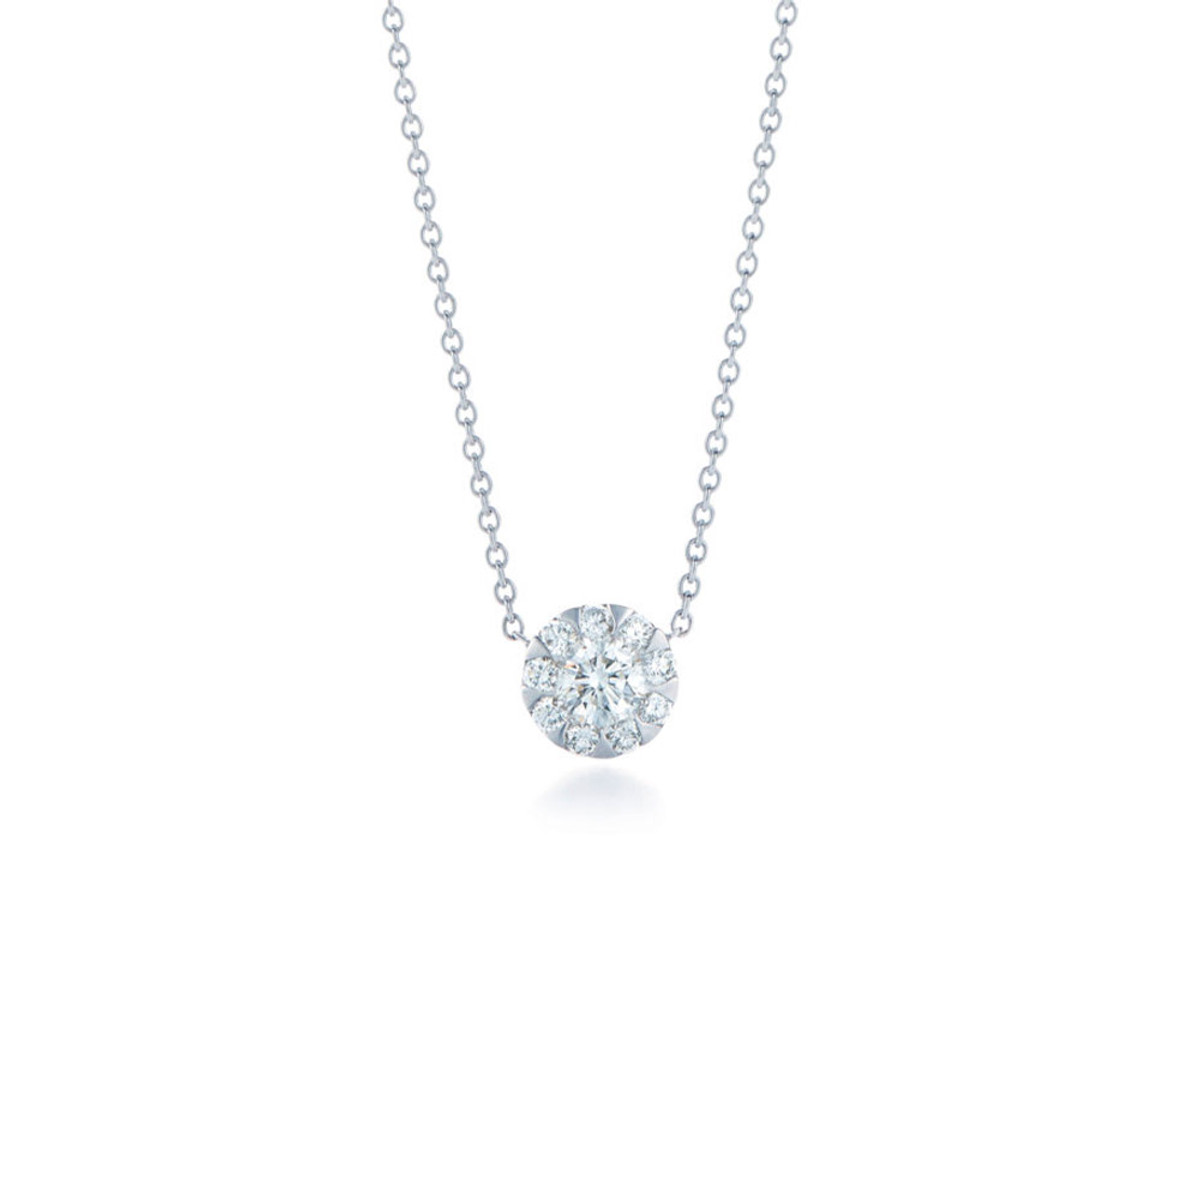 Kwiat 18K White Gold Diamond Pendant-51841 Product Image